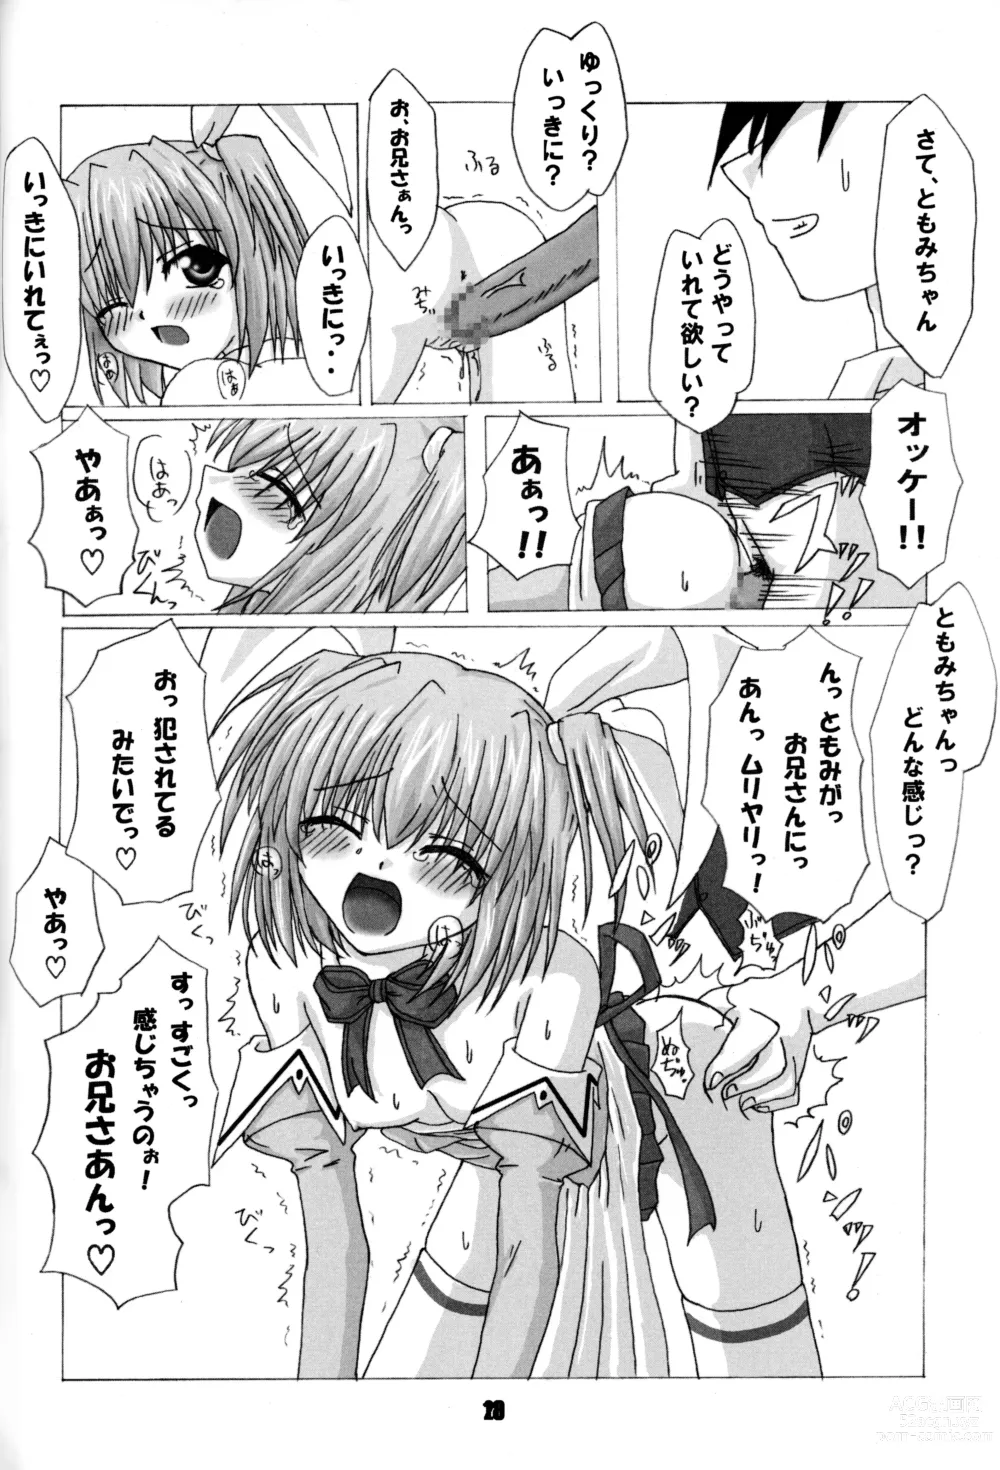 Page 19 of doujinshi Rollin 6